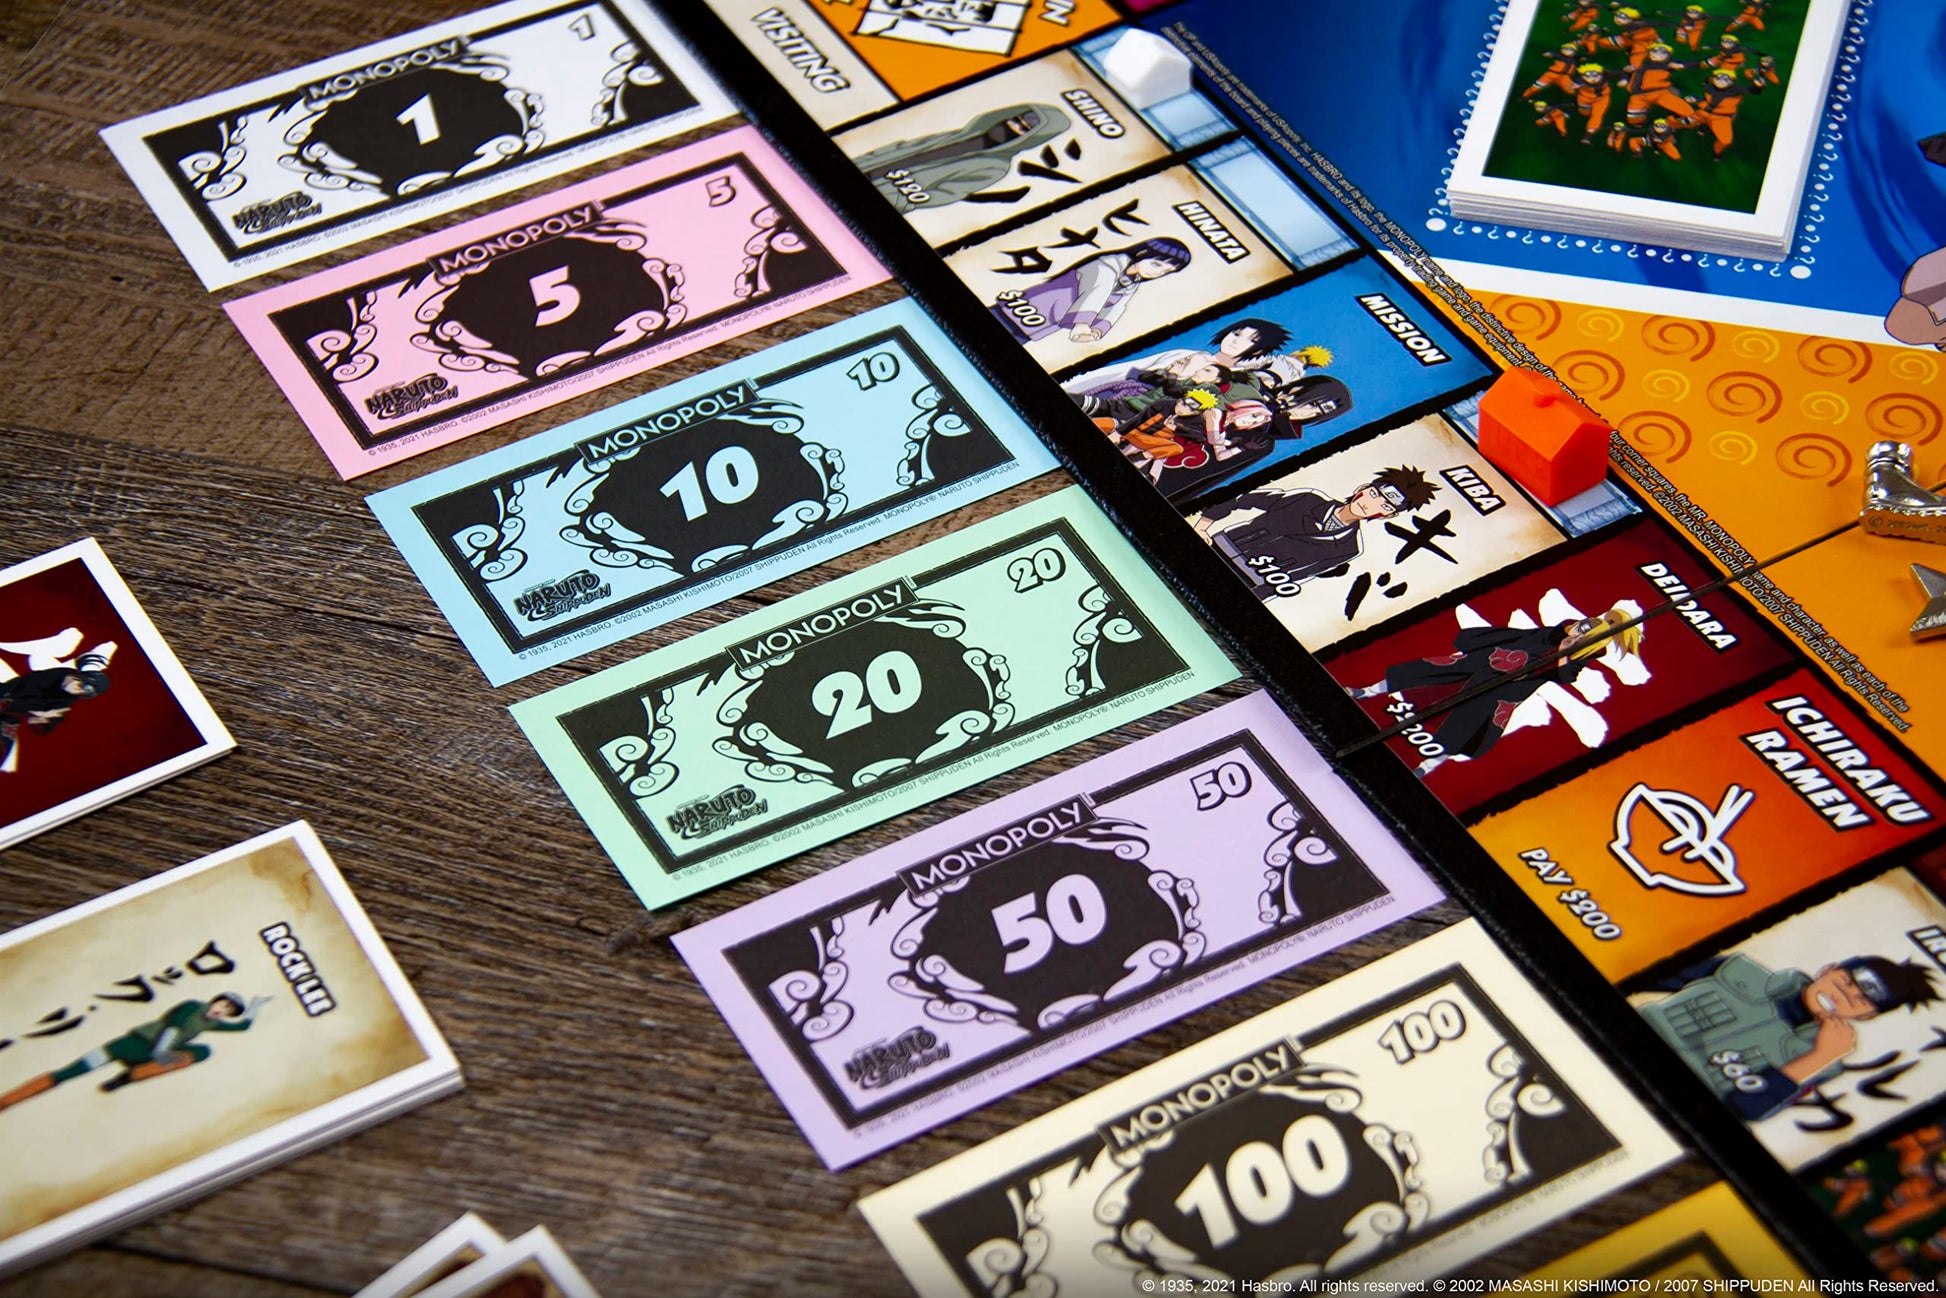 Monopoly Naruto - Zippigames